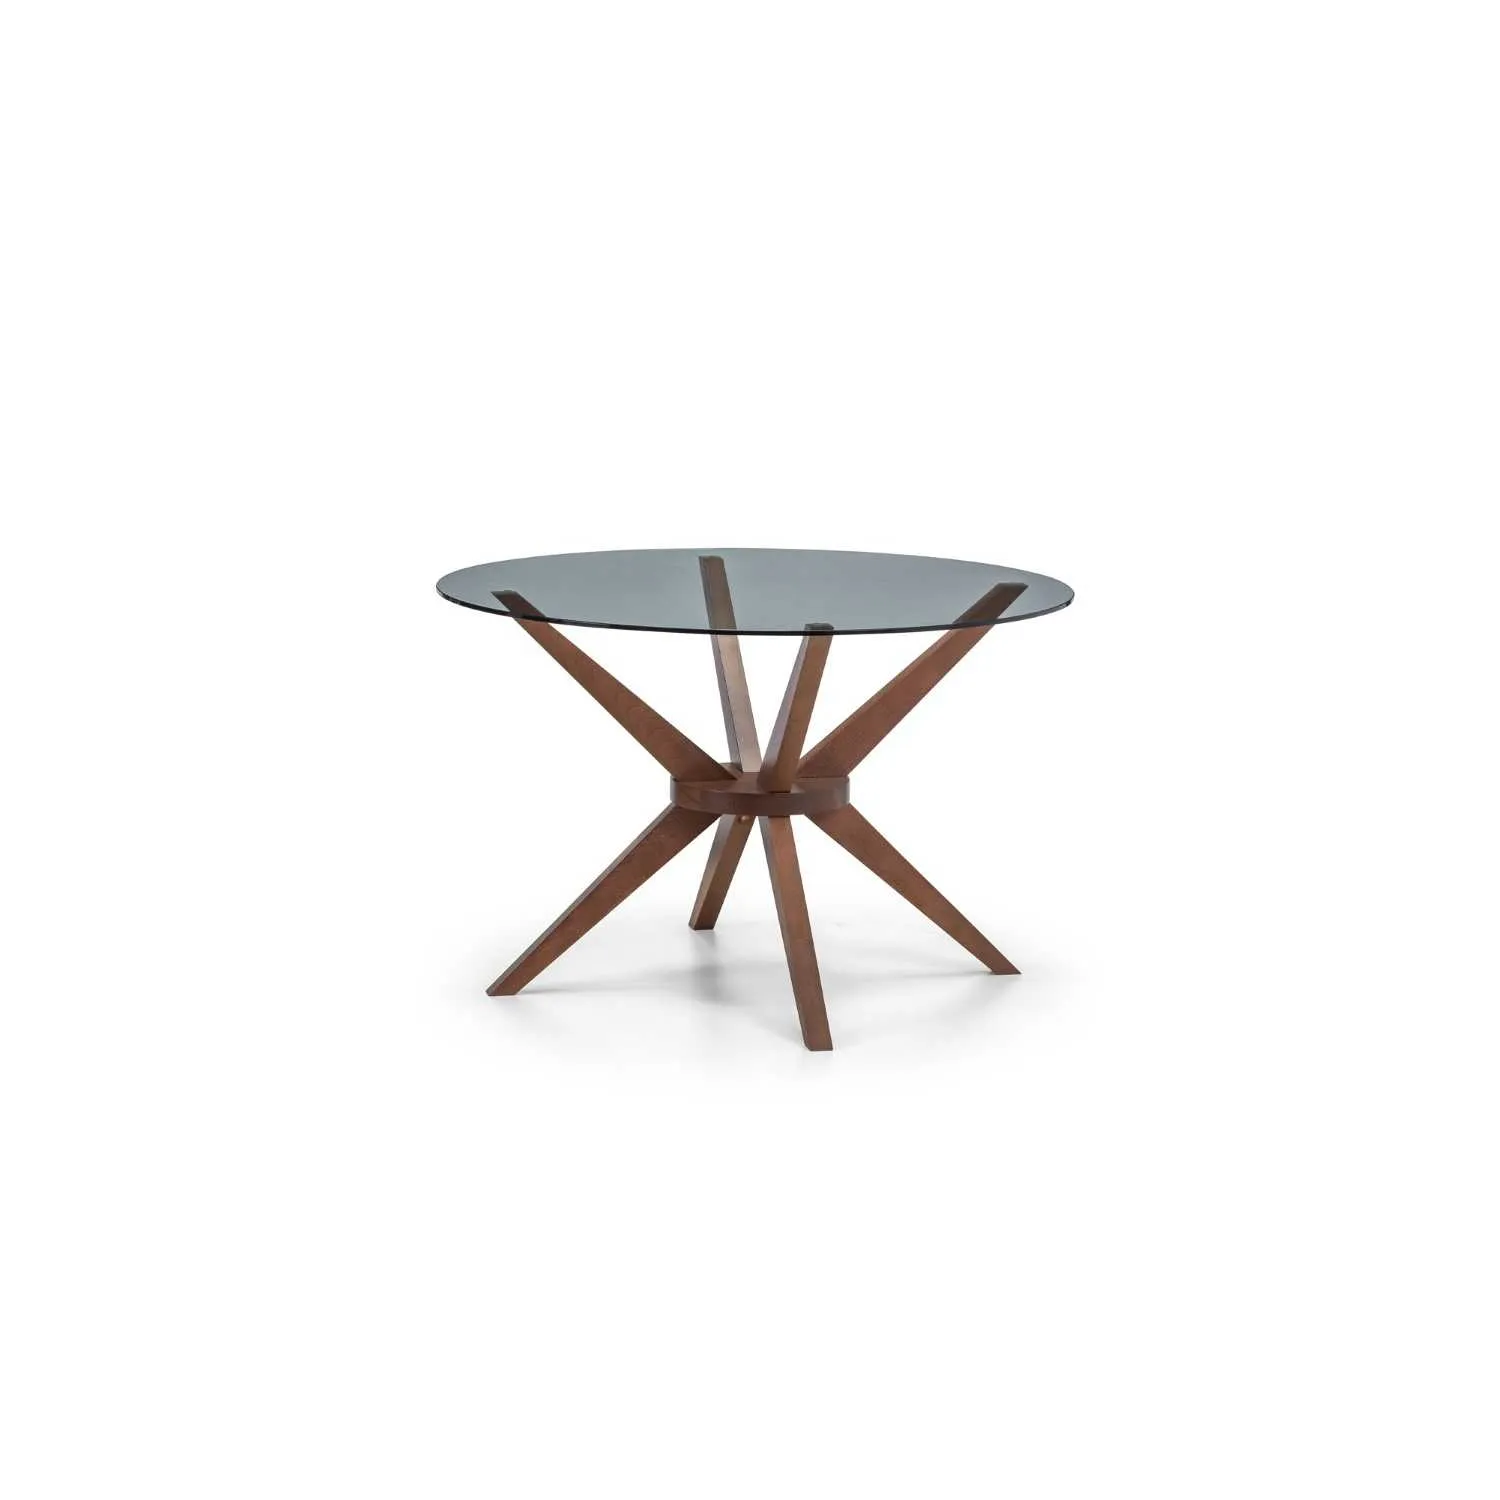 Round Glass Top Dining Table Dark Wood Walnut Finish Legs 120cm Diameter